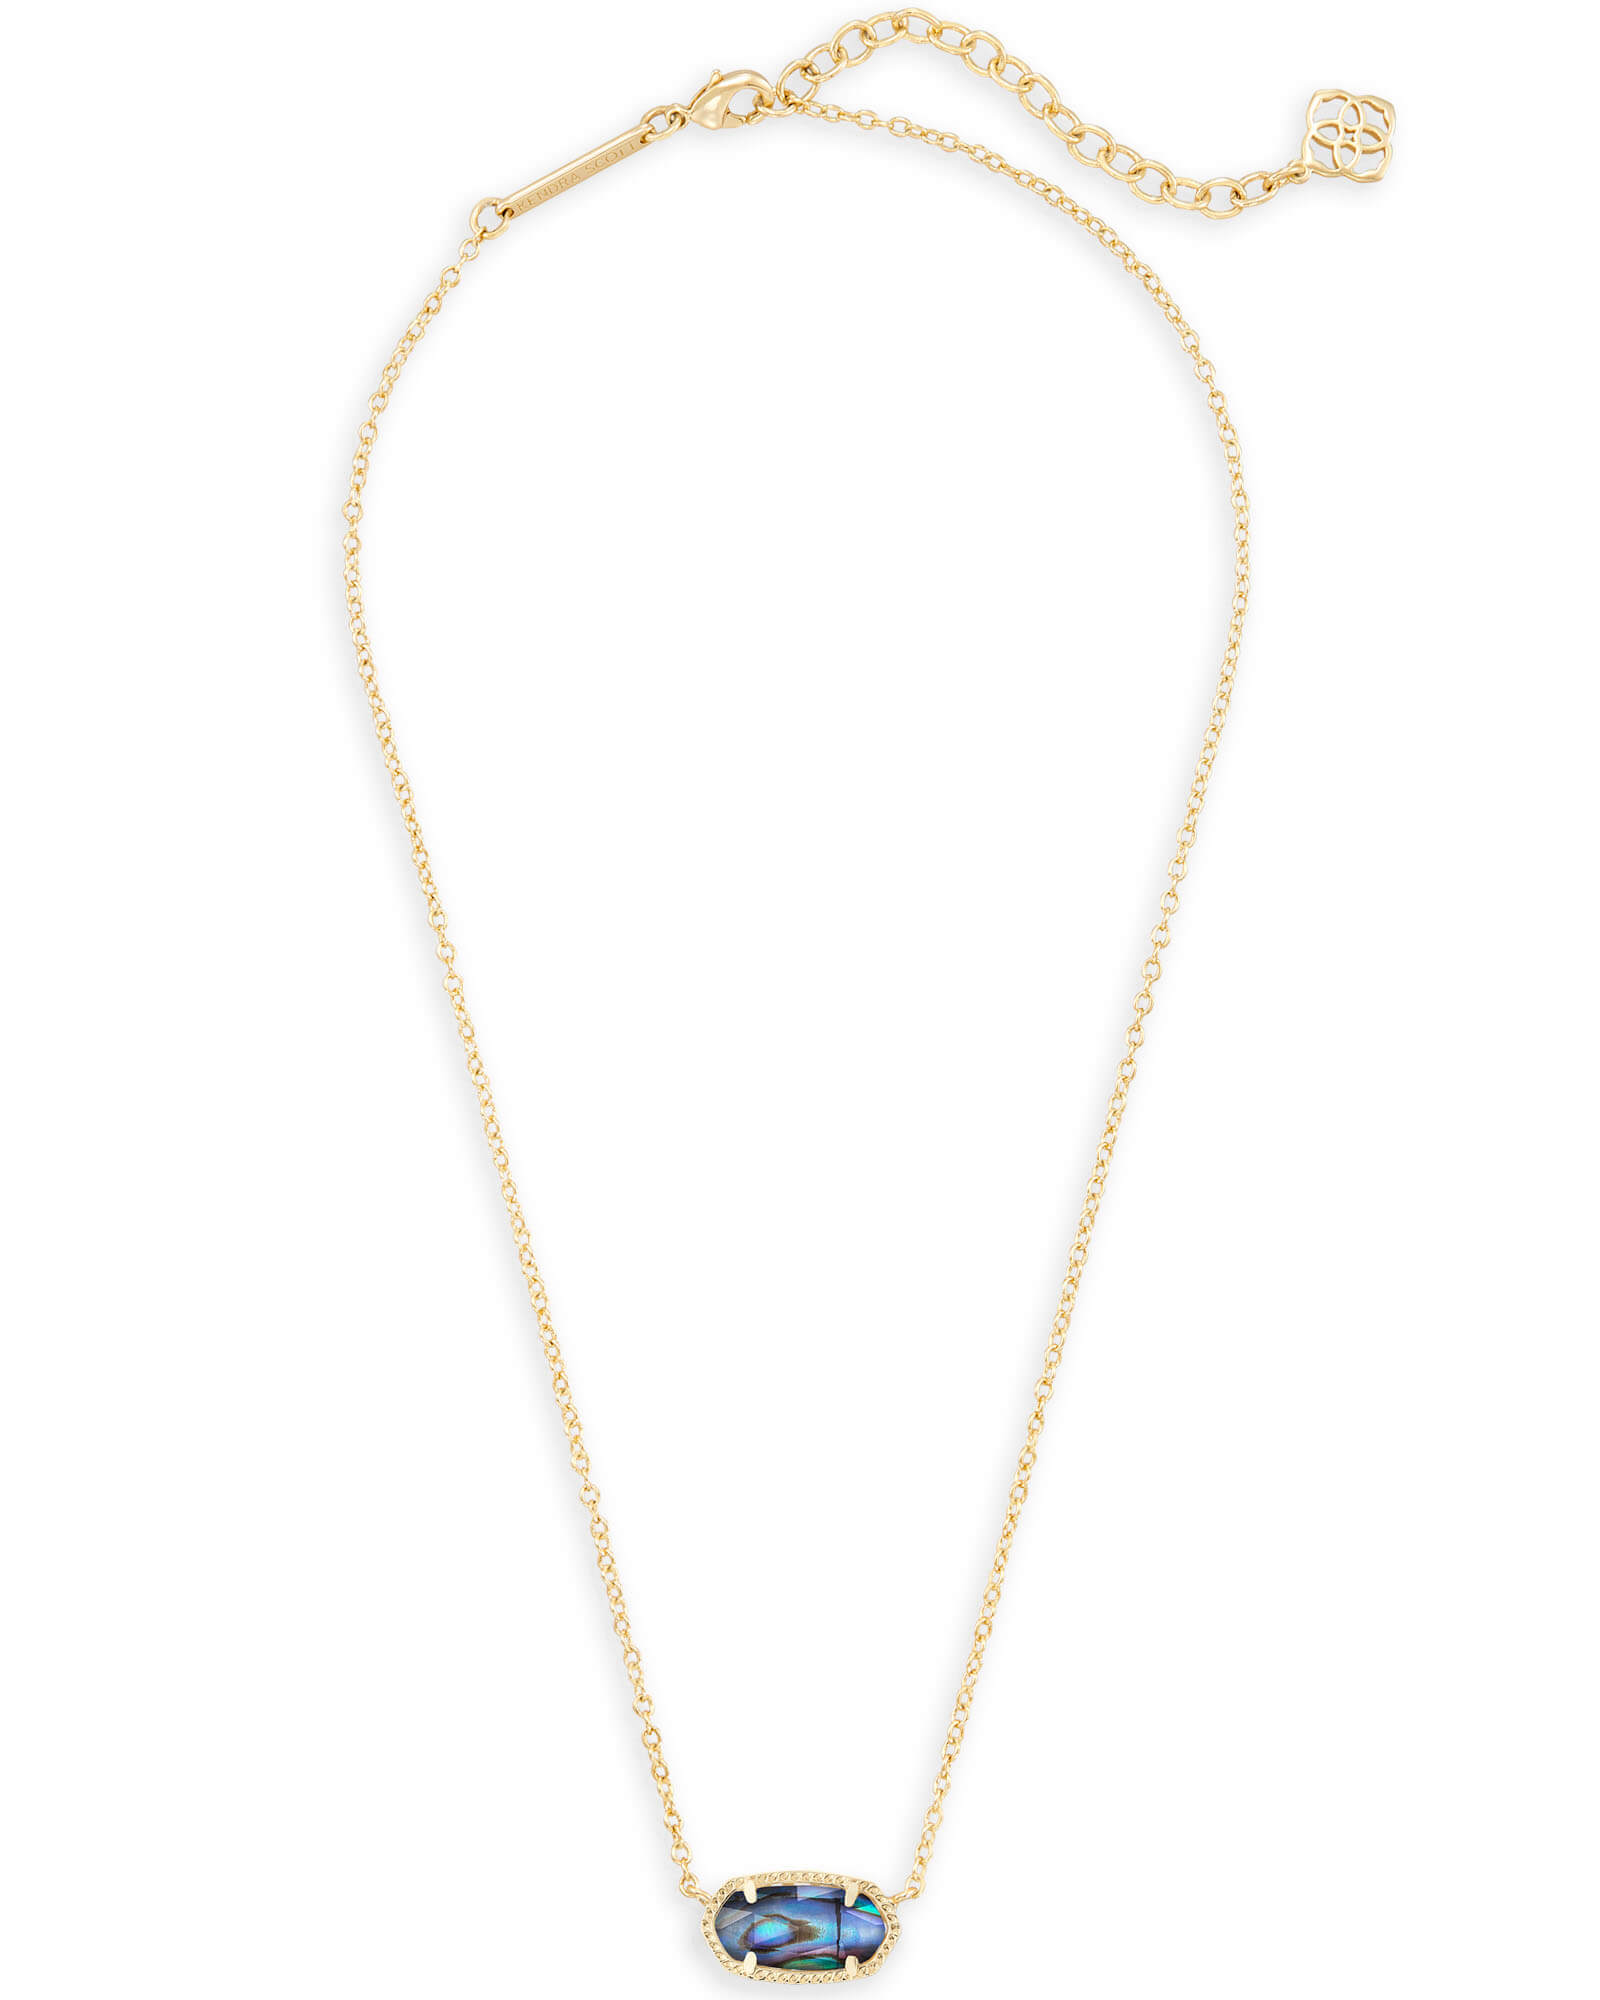 Elisa Gold Pendant Necklace Abalone Shell | Kendra Scott